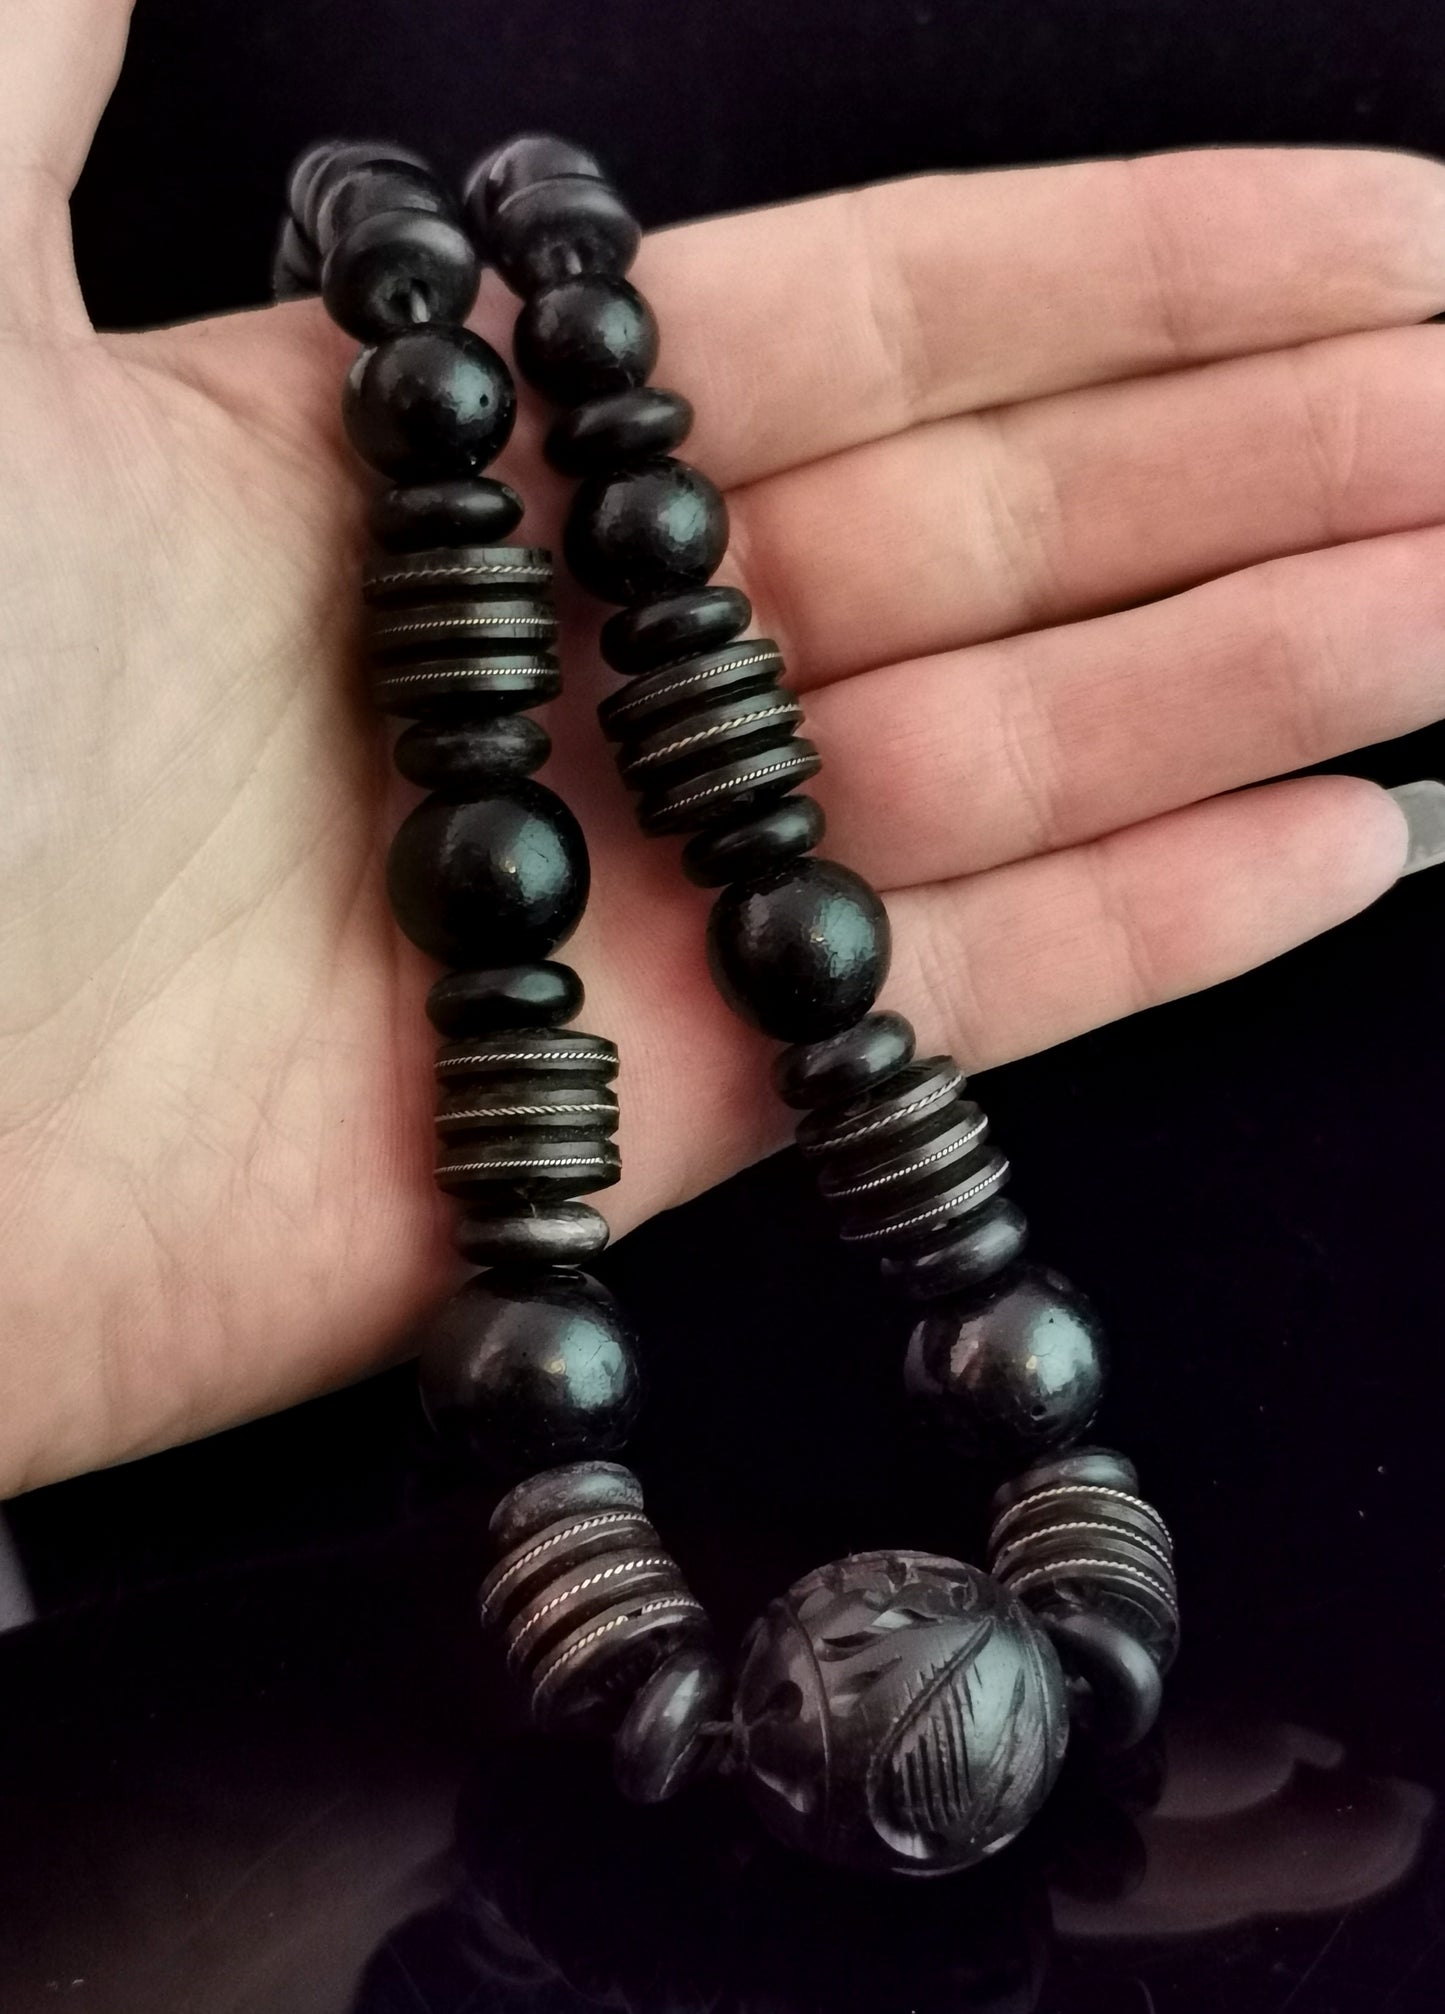 Victorian bog oak and wood bead necklace